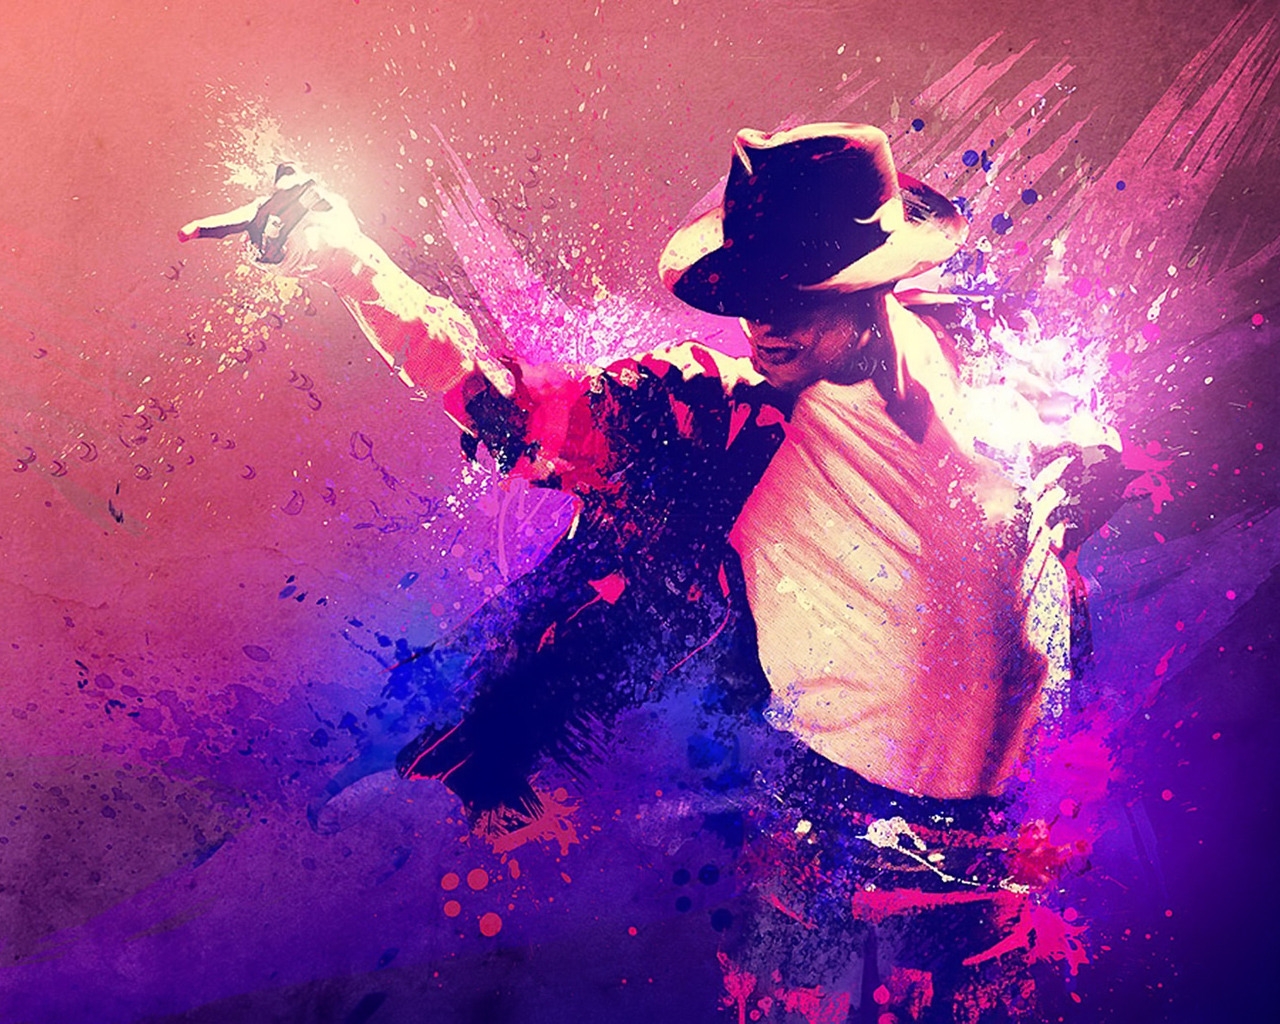 Michael Jackson Fanart for 1280 x 1024 resolution